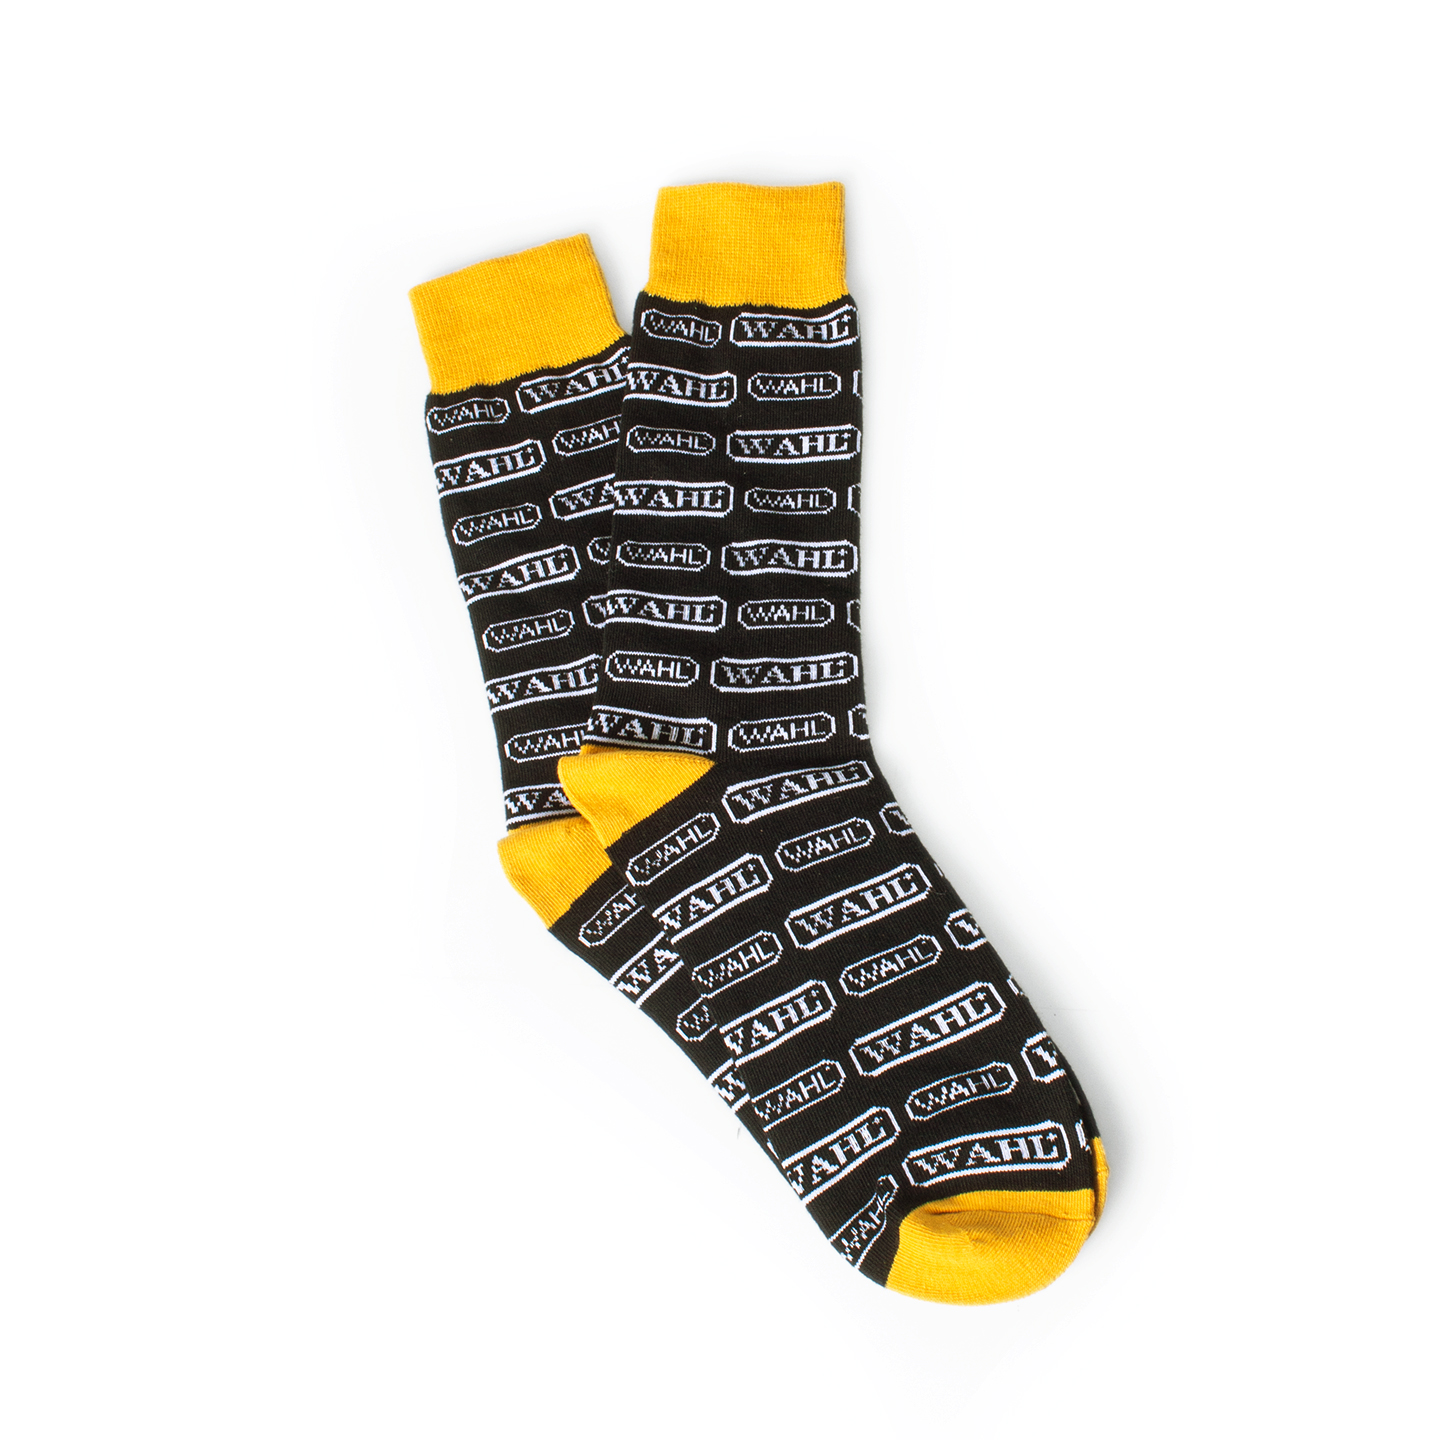 Wahl Socks - Wahl UK - Branded Socks From Wahl